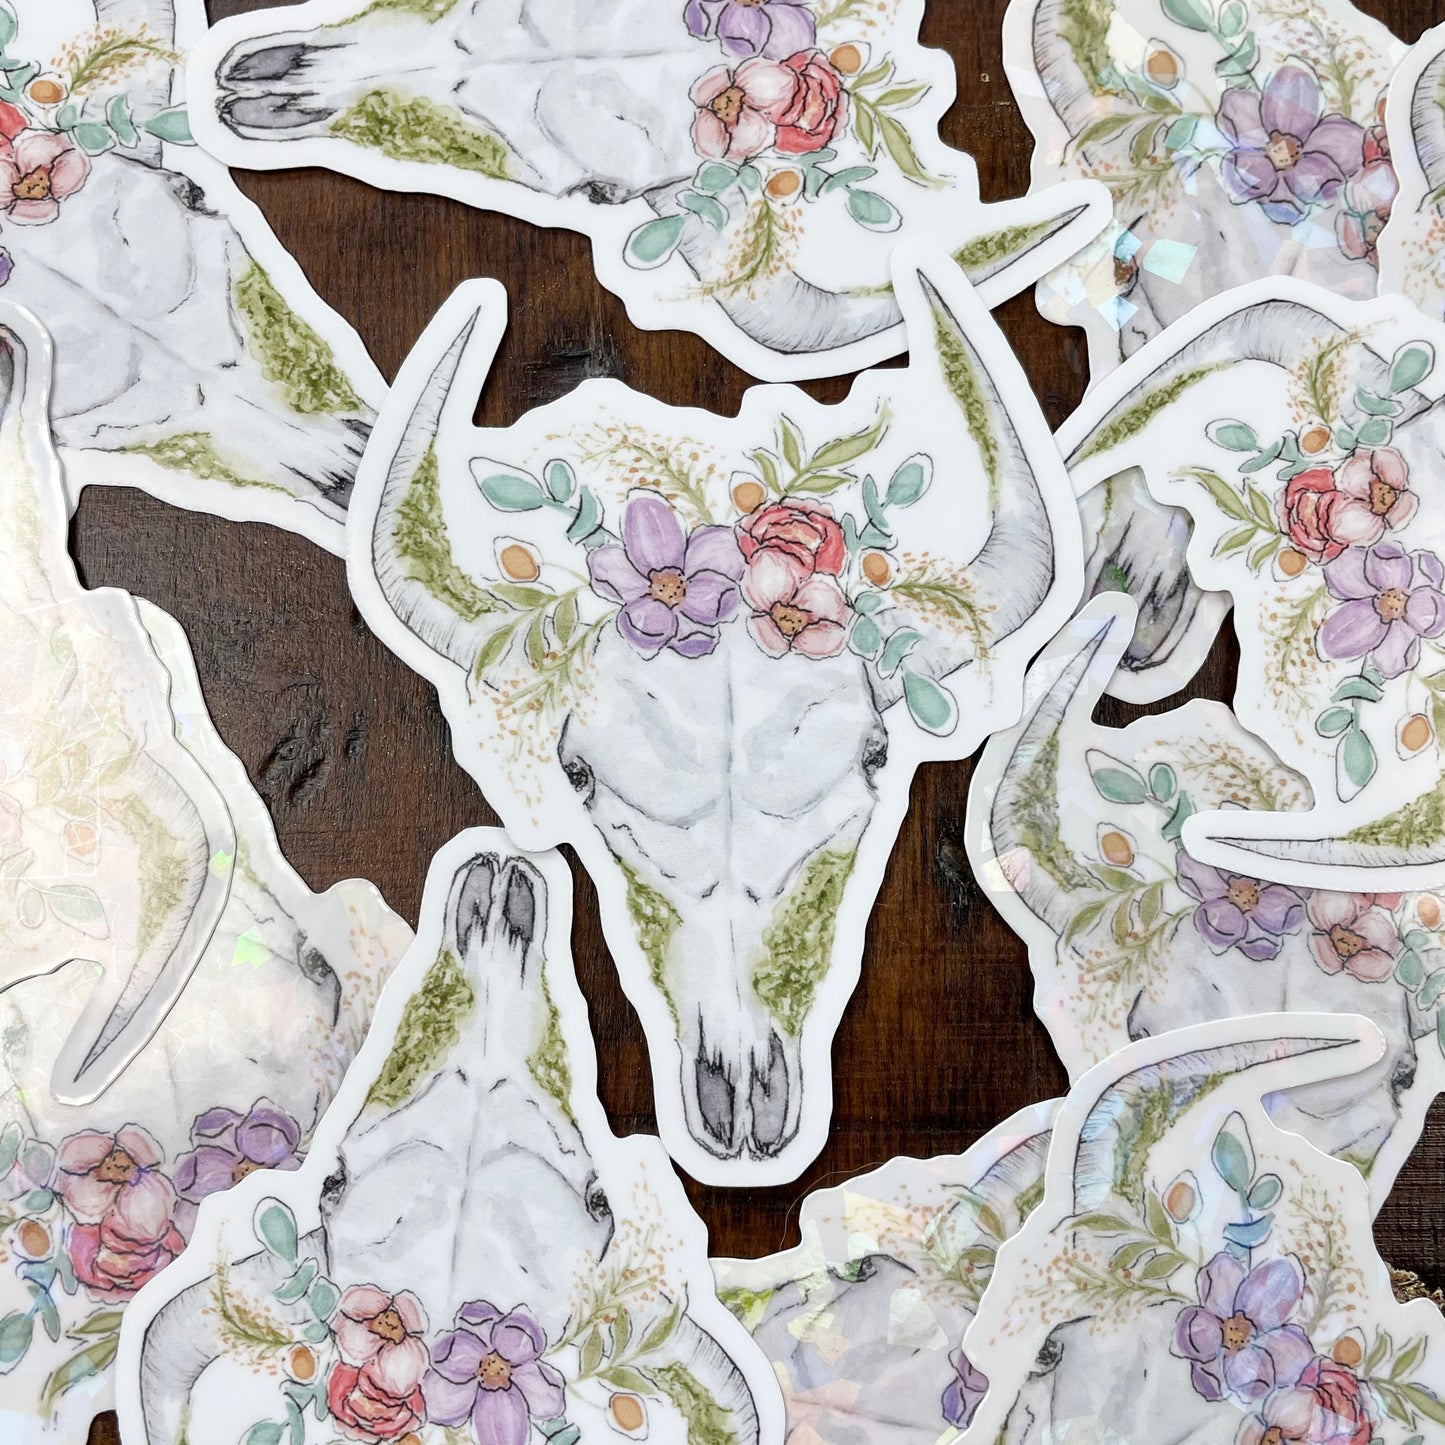 Floral Cow Skull Sticker